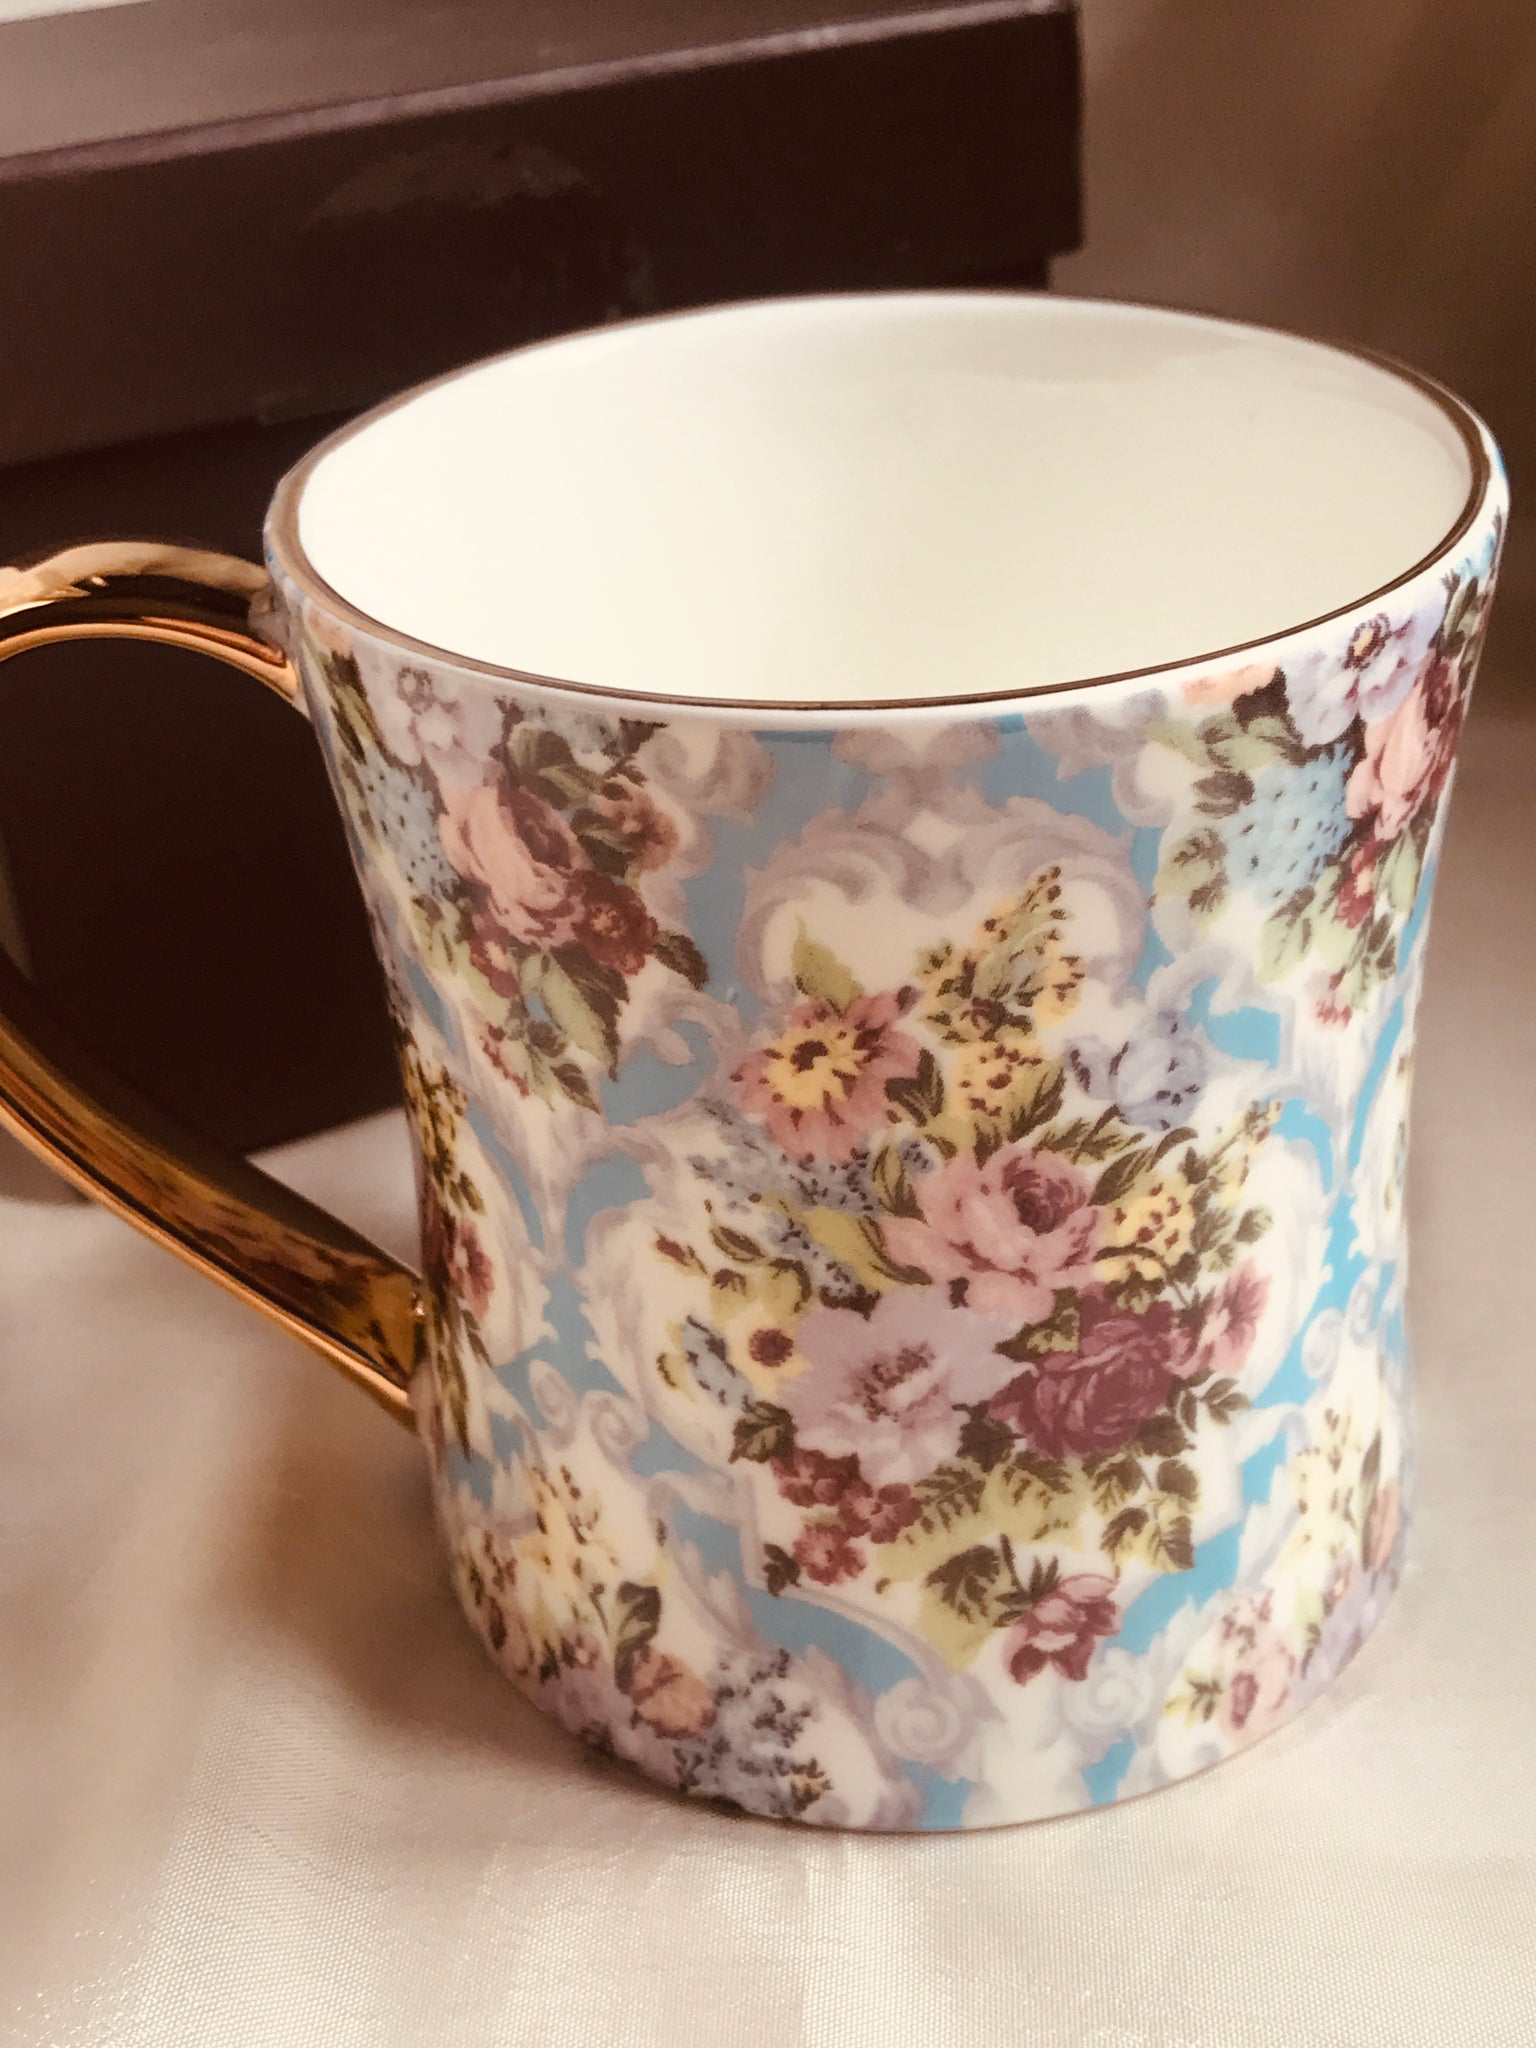 Birthday porcelain floral Mug